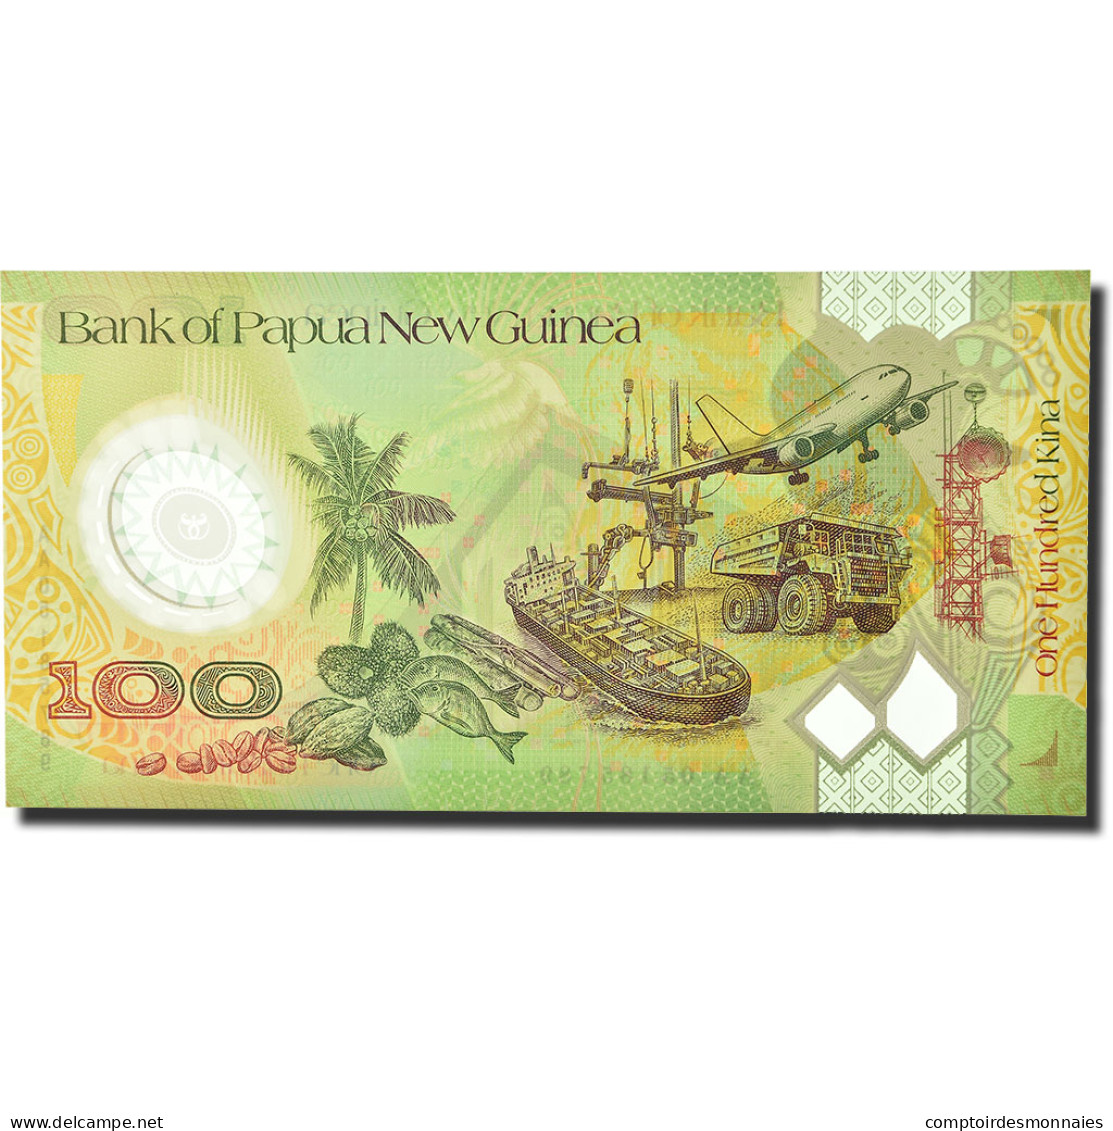 Billet, Papua New Guinea, 100 Kina, 2005, KM:33a, NEUF - Papouasie-Nouvelle-Guinée